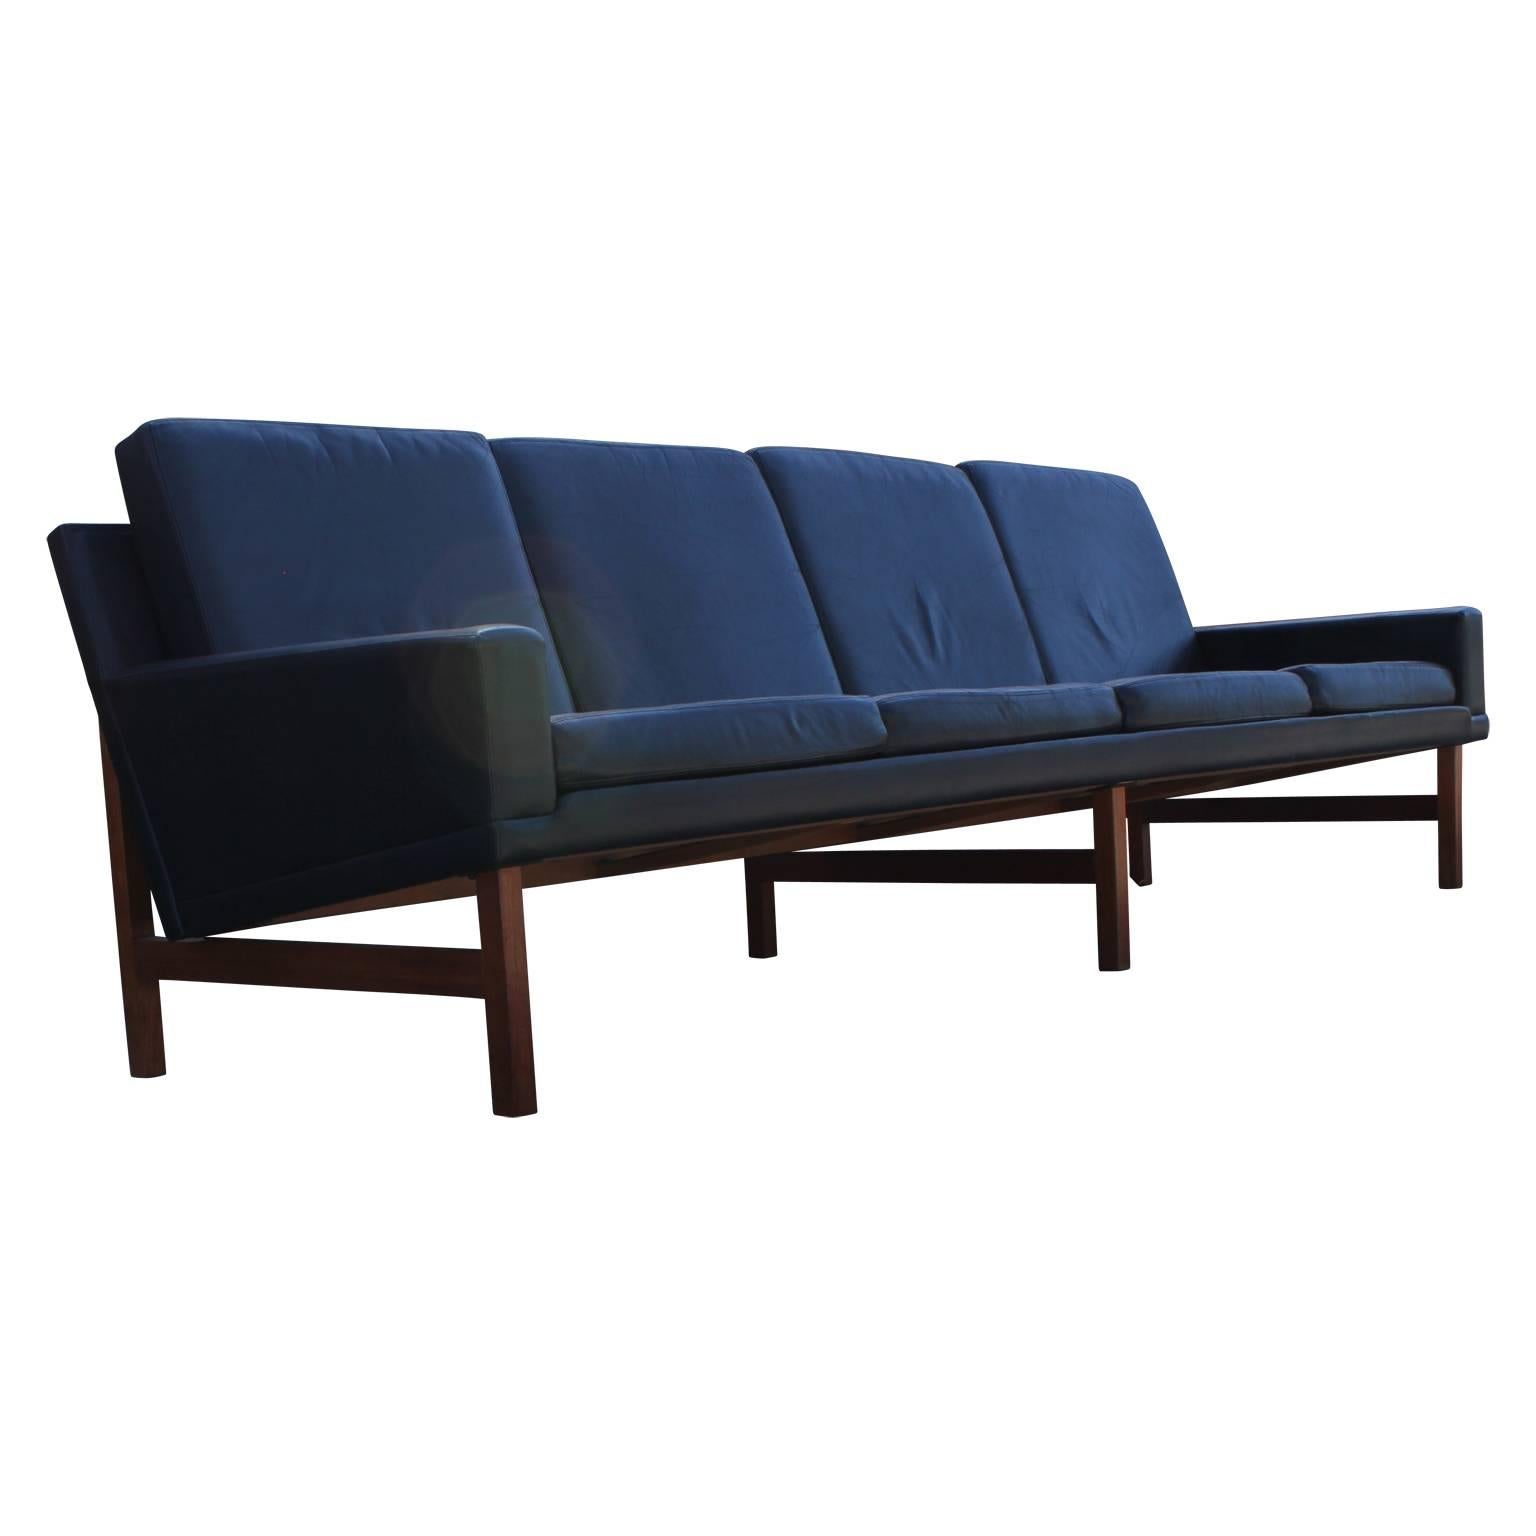 Mid-20th Century Ultra Modern Danish Black Leather Sofa with Teak Legs Hans Wegner Style